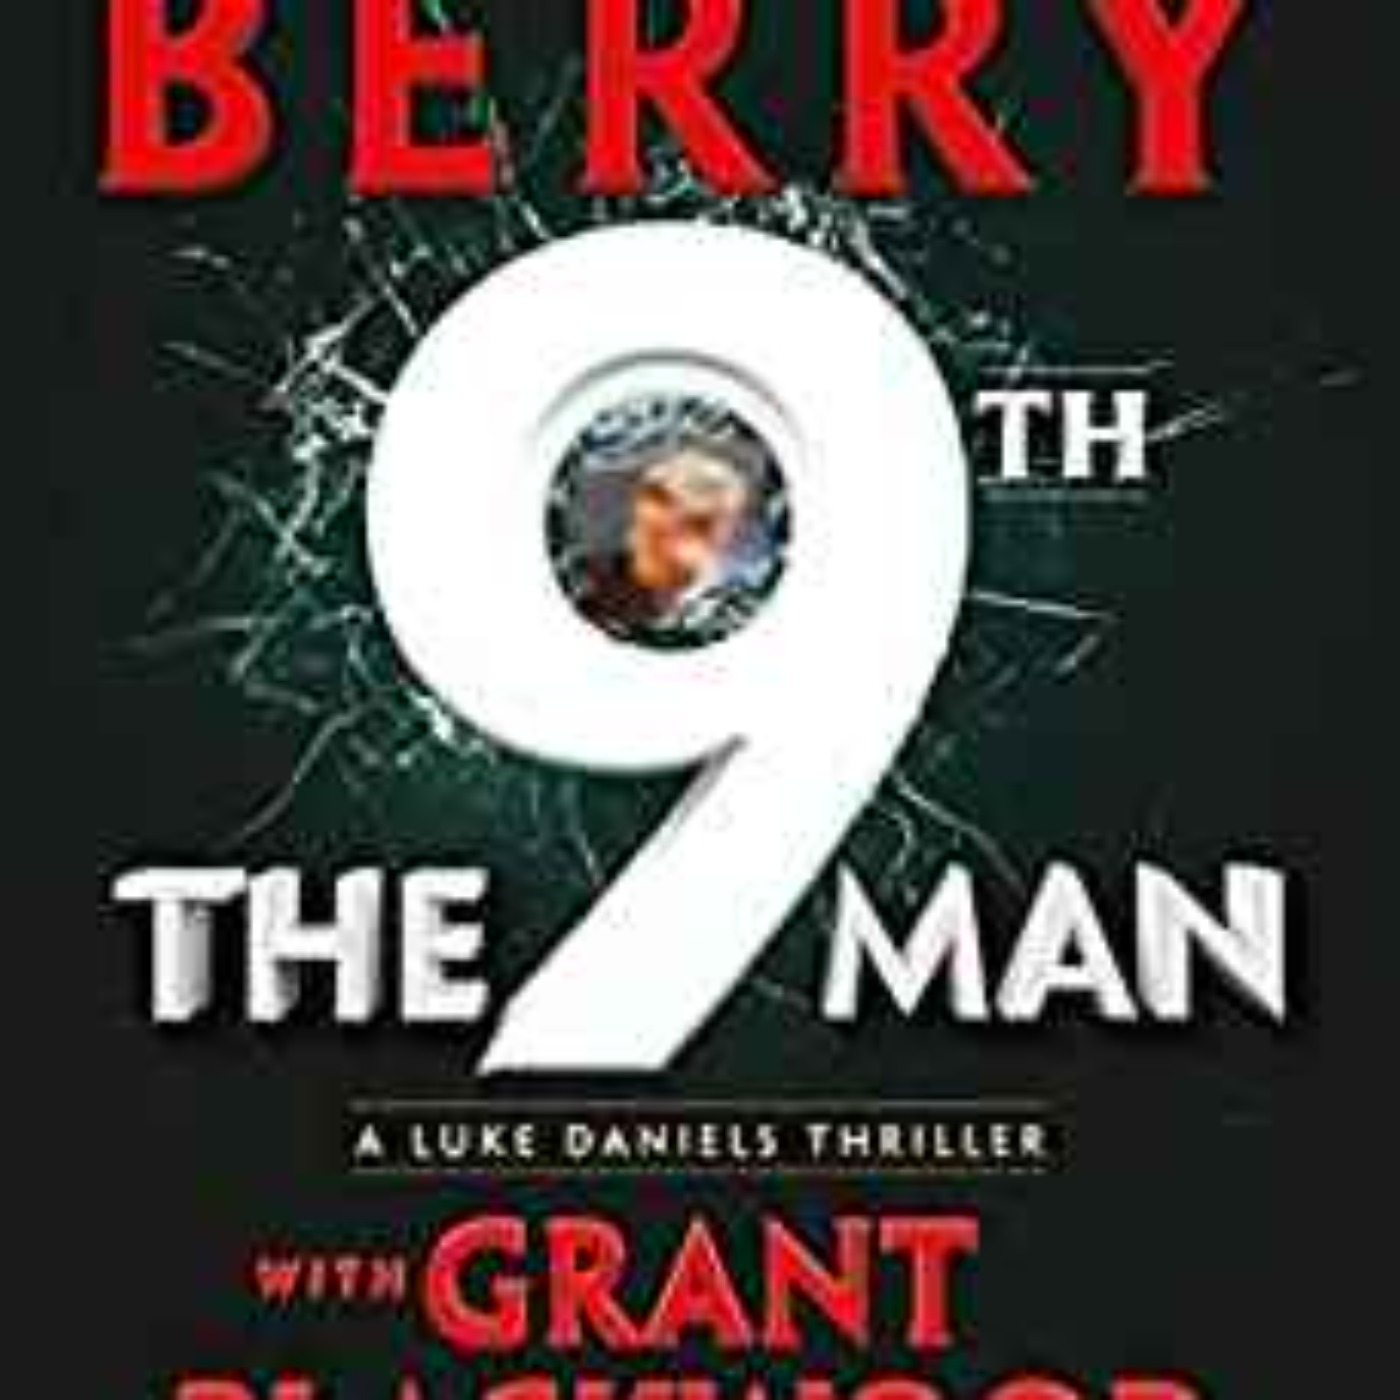 Steve Berry & Grant Blackwood - 9th Man